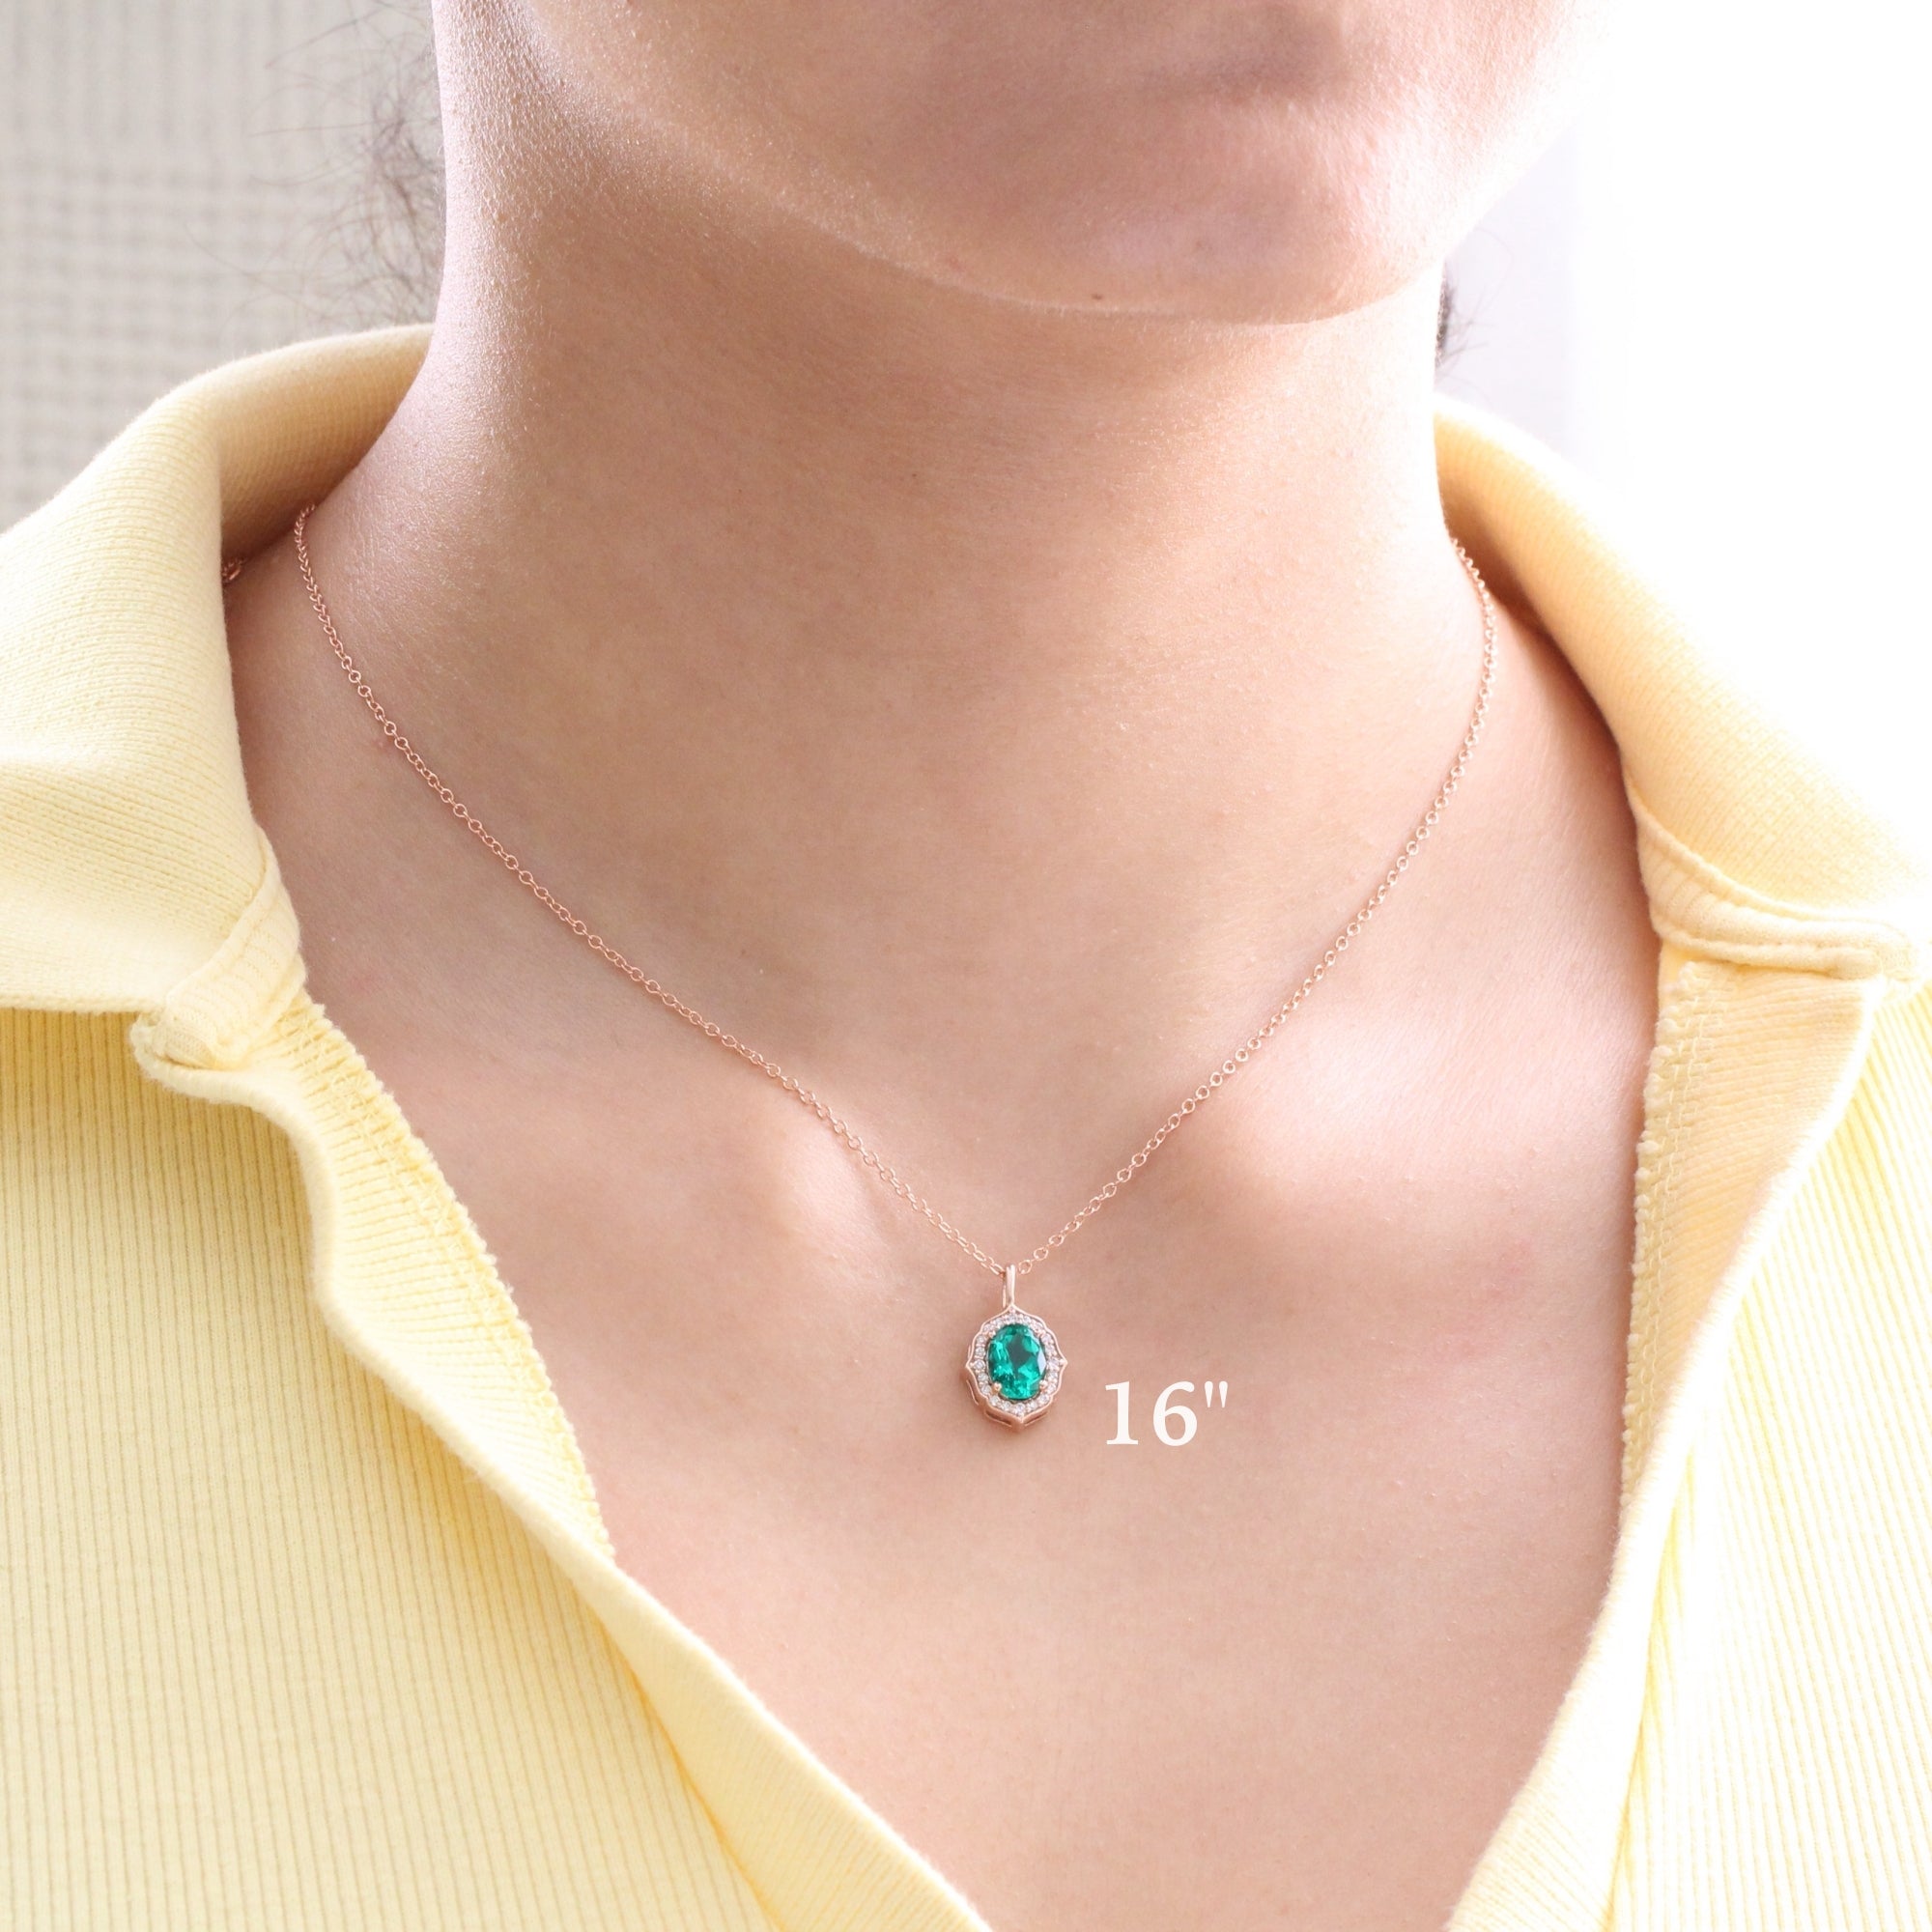 oval emerald necklace rose gold vintage style emerald diamond drop pendant necklace la more design jewelry